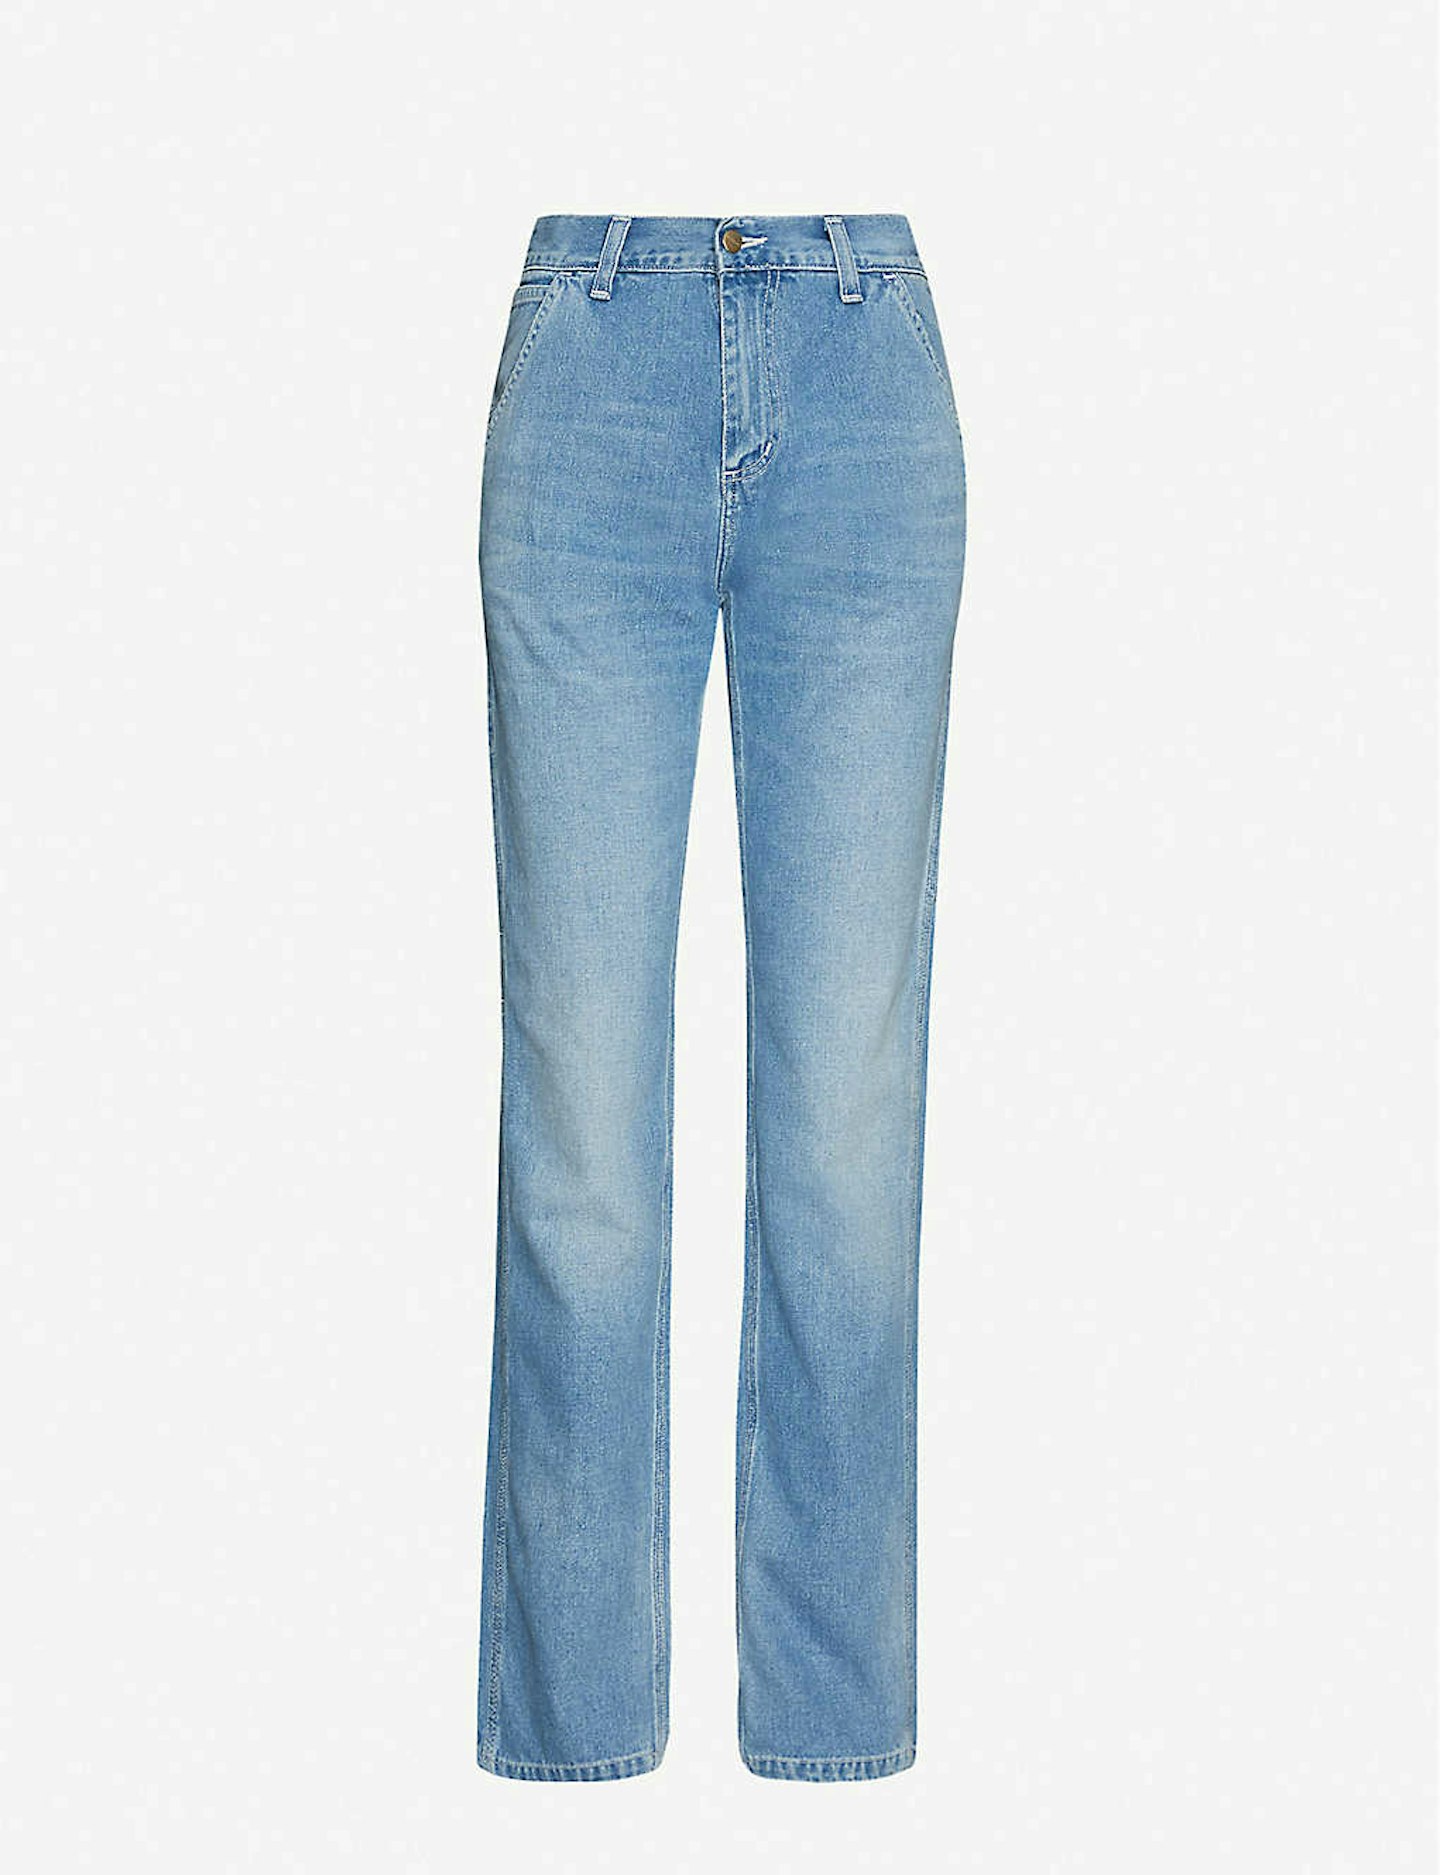 carhartt wip jeans